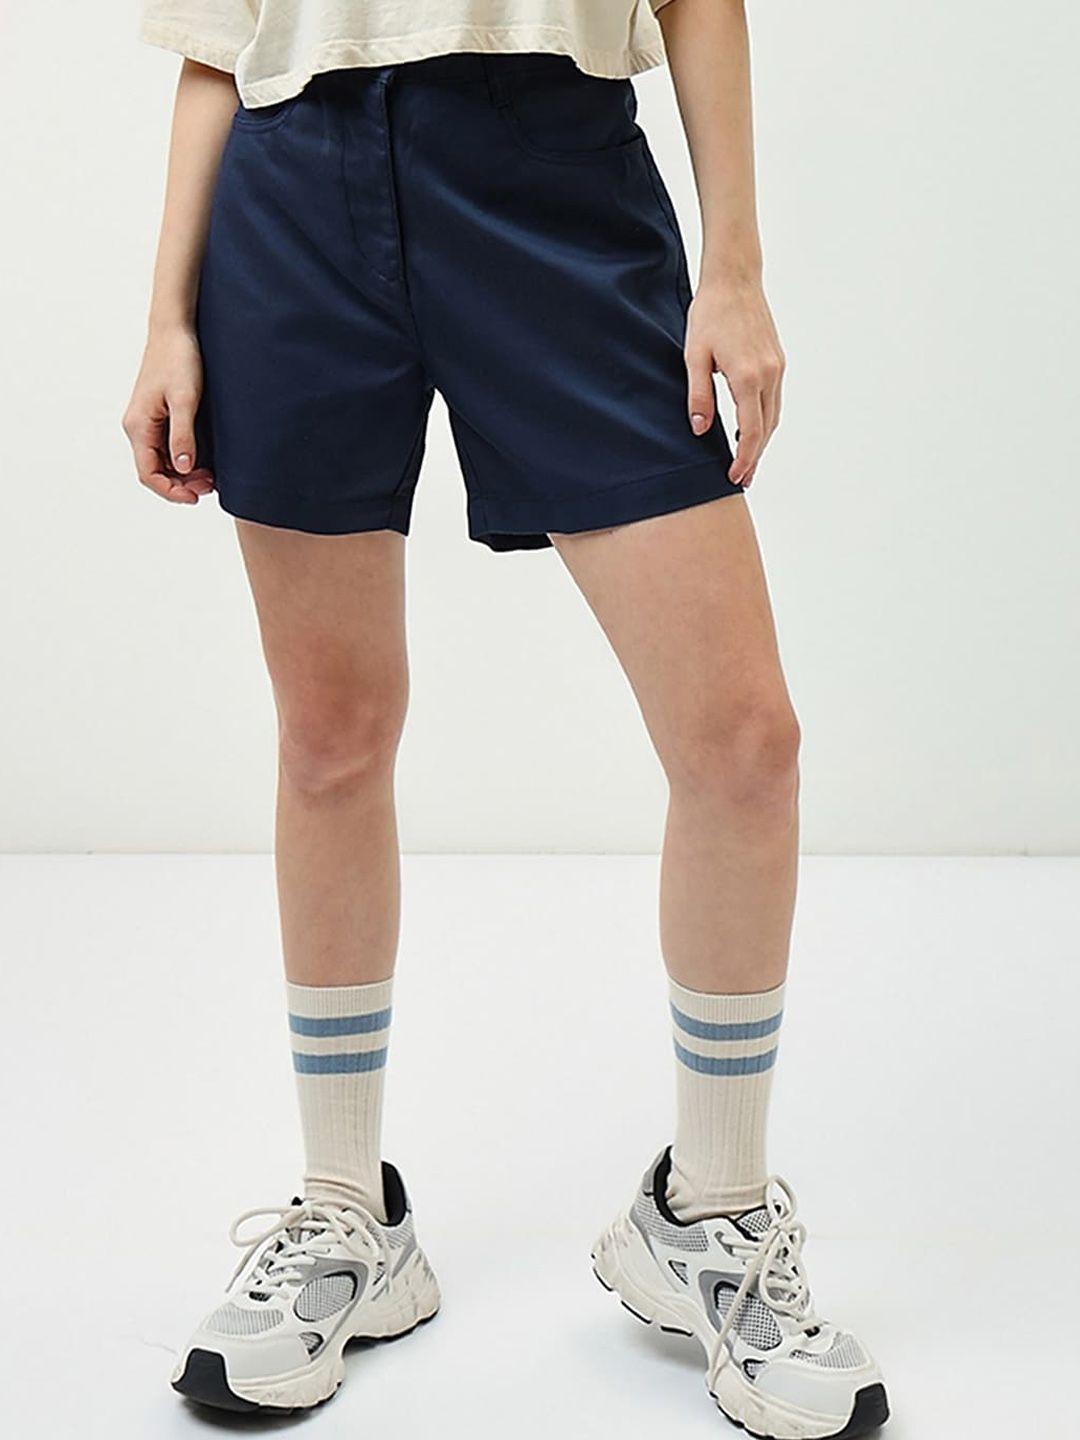 bewakoof women blue loose fit fashion shorts